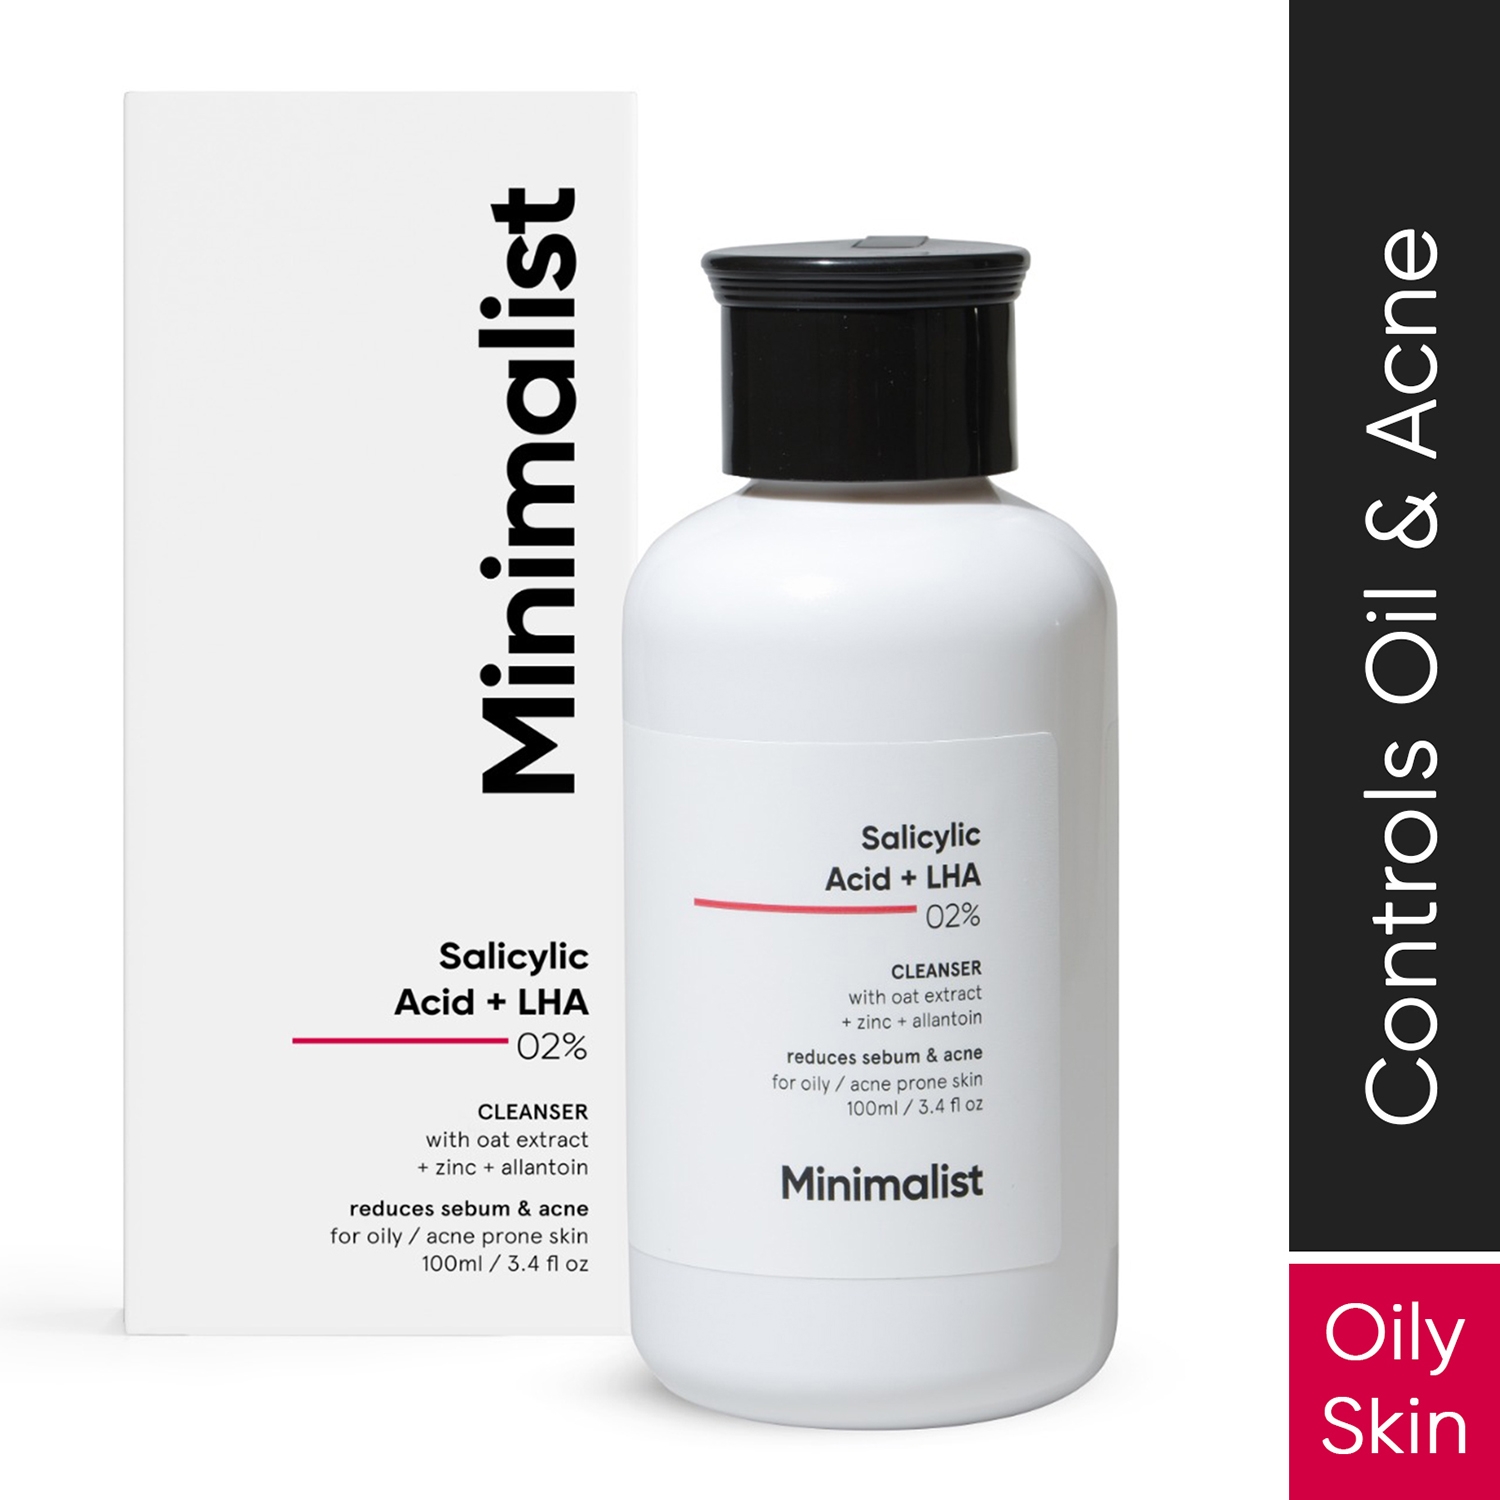 Minimalist | Minimalist 2% Salicylic Acid + LHA Cleanser Reduces Sebum & Acne (100ml)